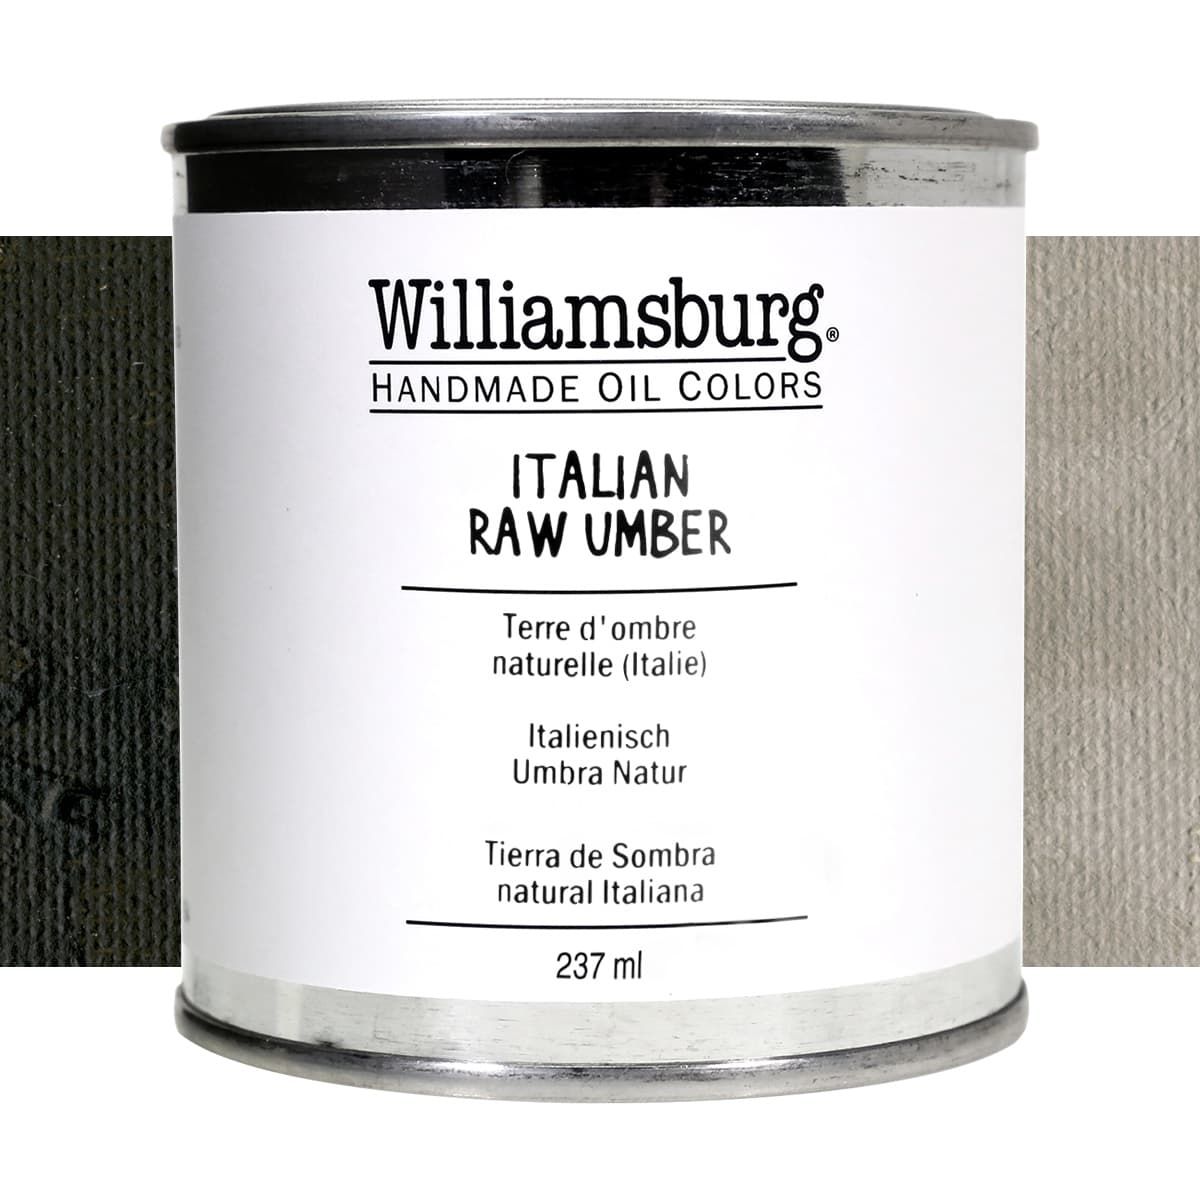 Williamsburg Oil Color 237 ml Can Italian Raw Umber